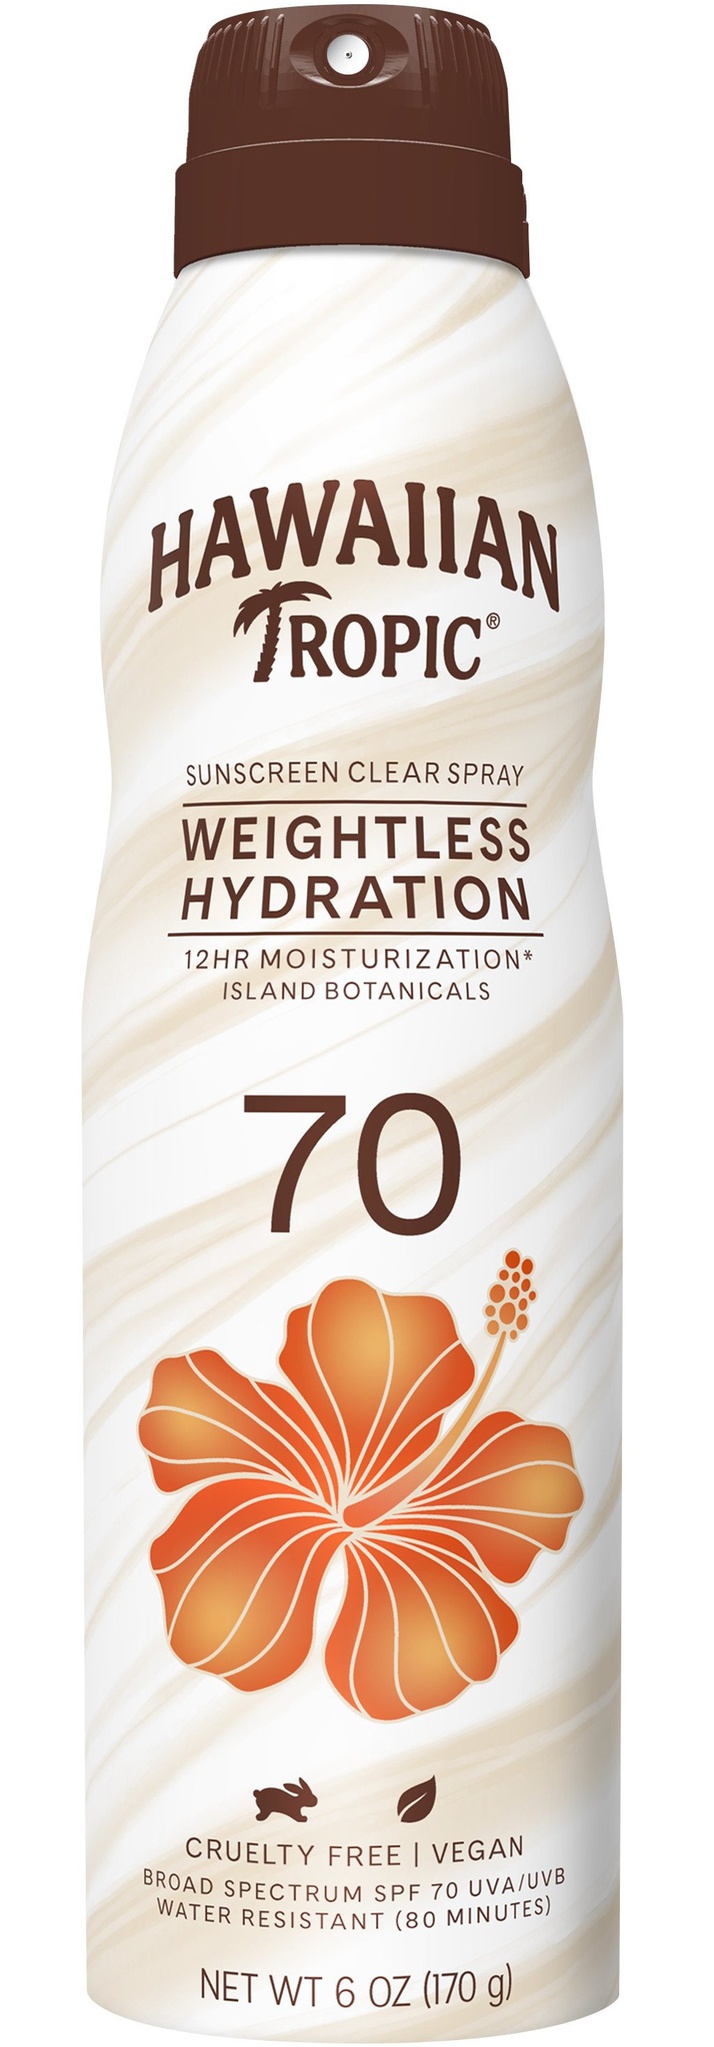 Hawaiian Tropic Weightless Hydration Clear Sunscreen Spray SPF 70